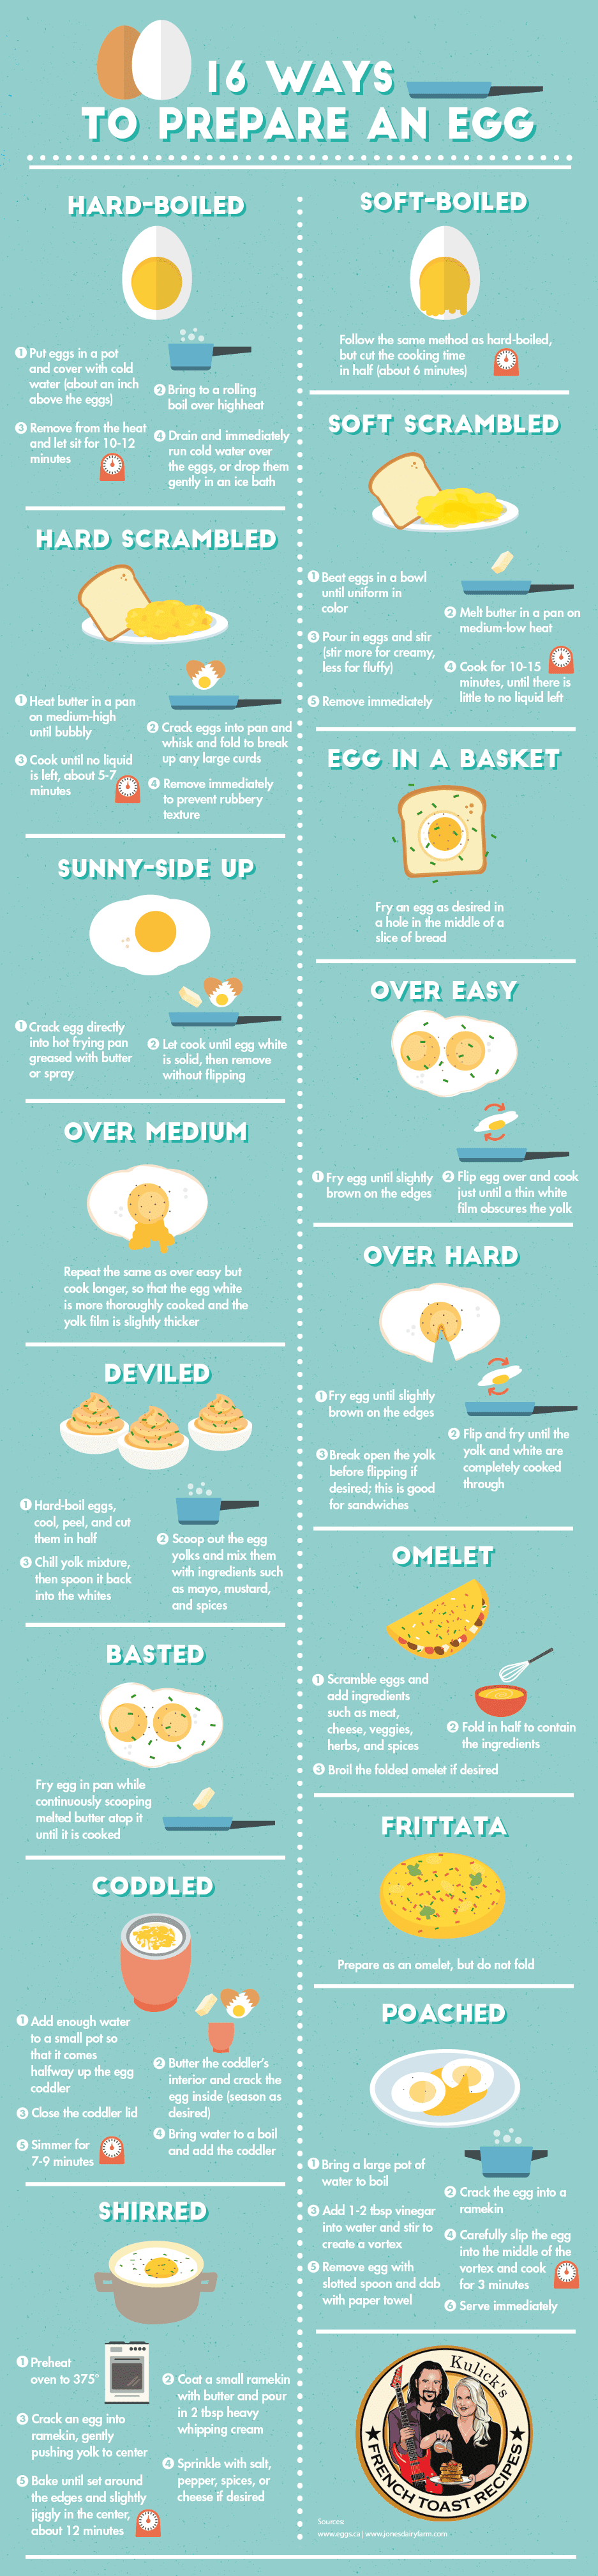 ways-prepare-egg-2